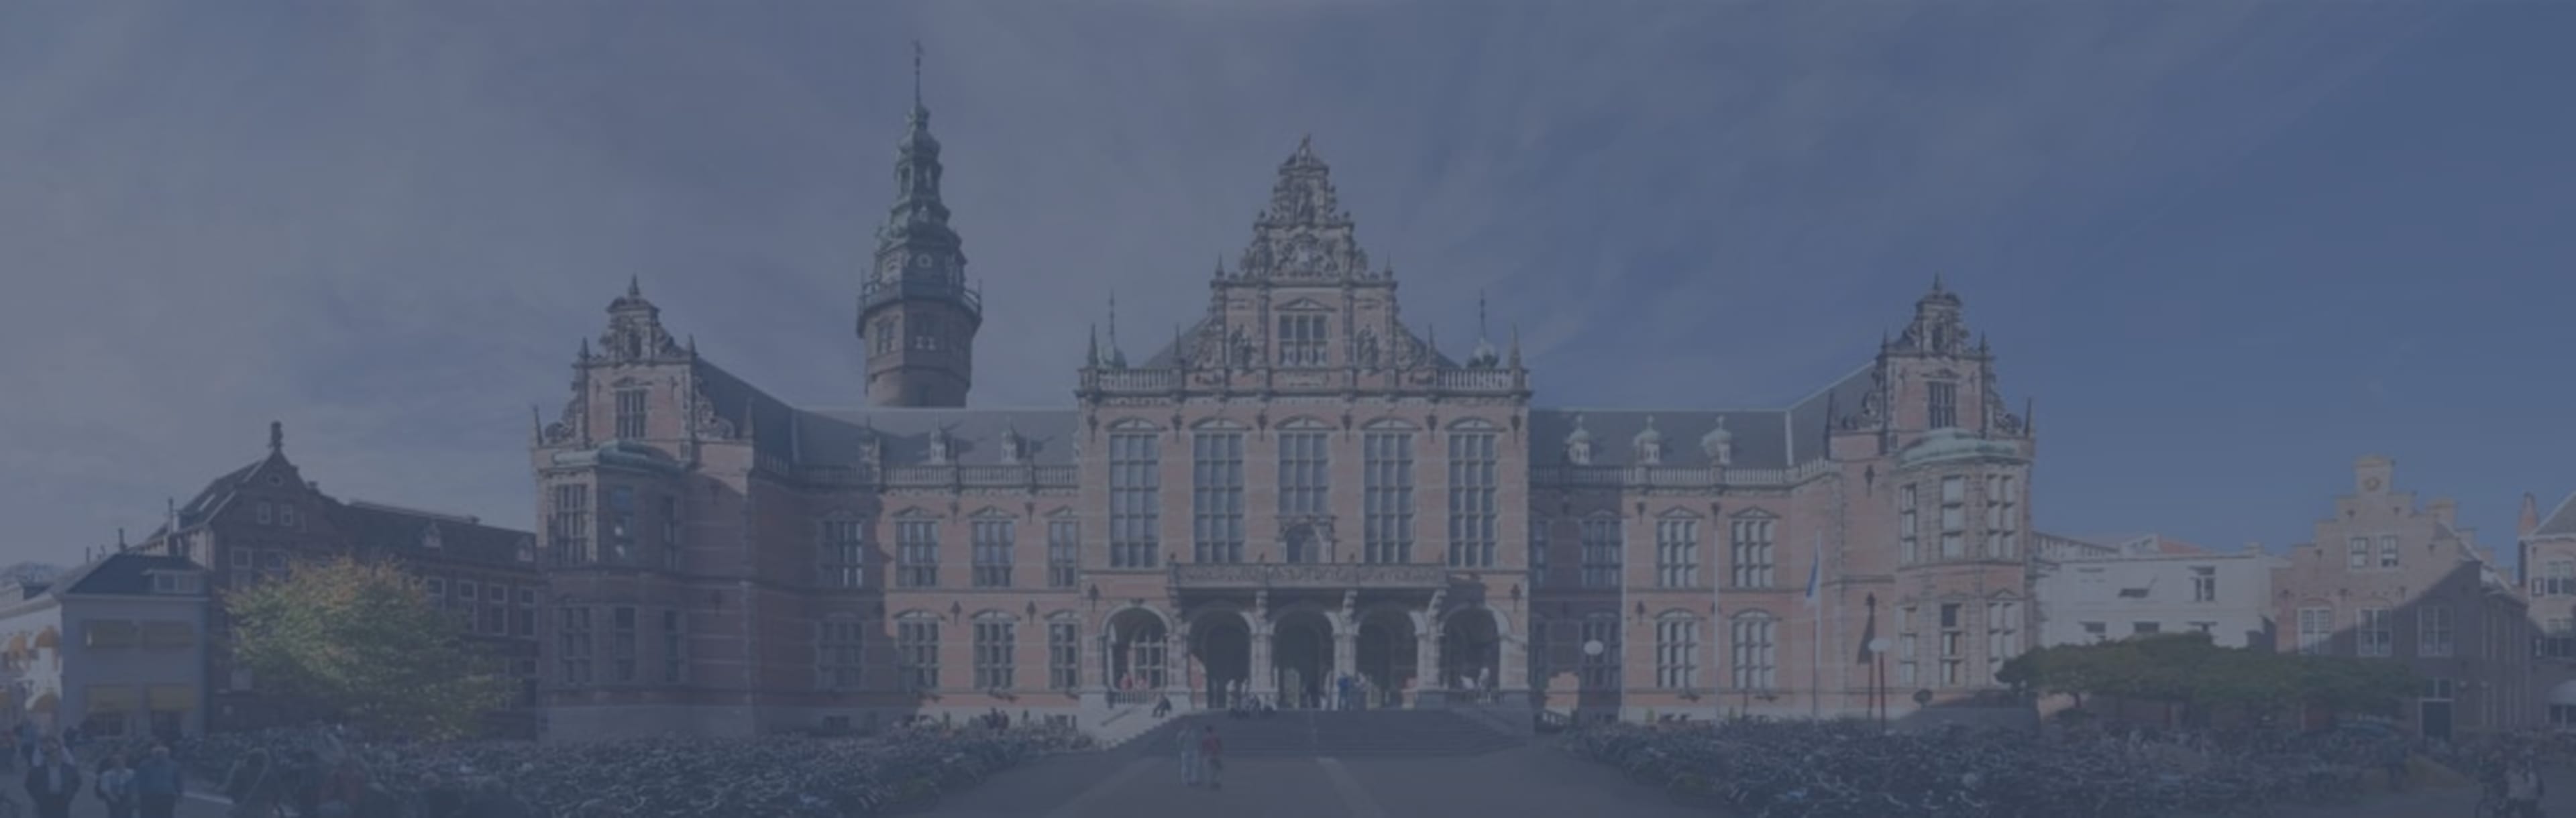 University of Groningen LLM Technologierecht en Innovatie